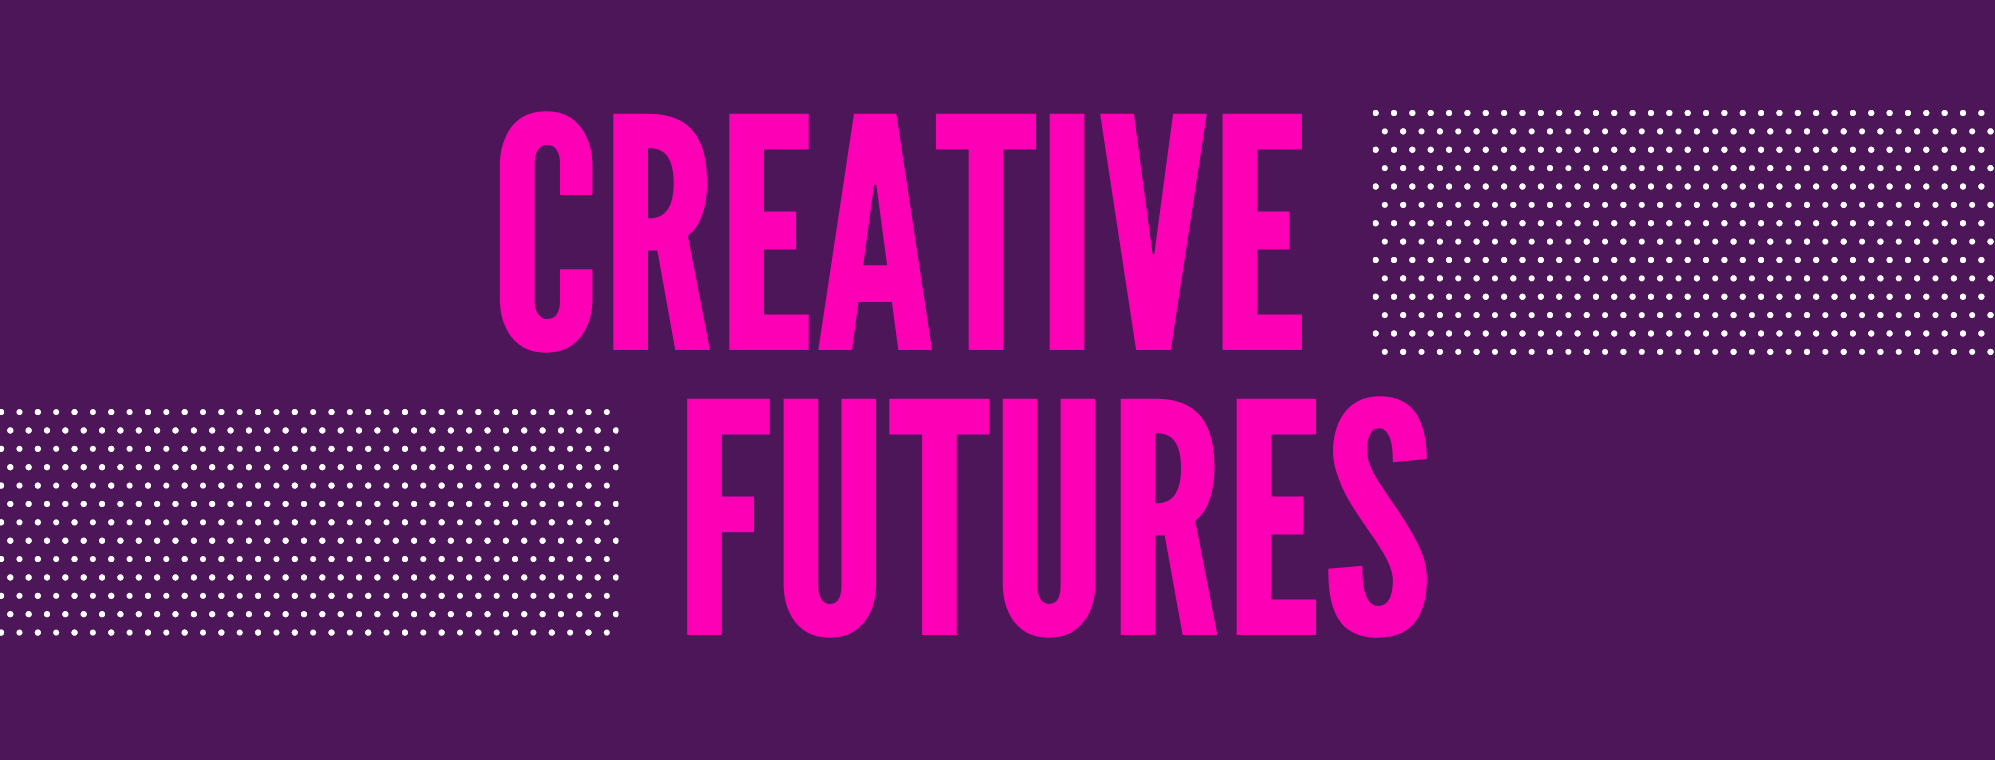 Creative_Futures_Banner